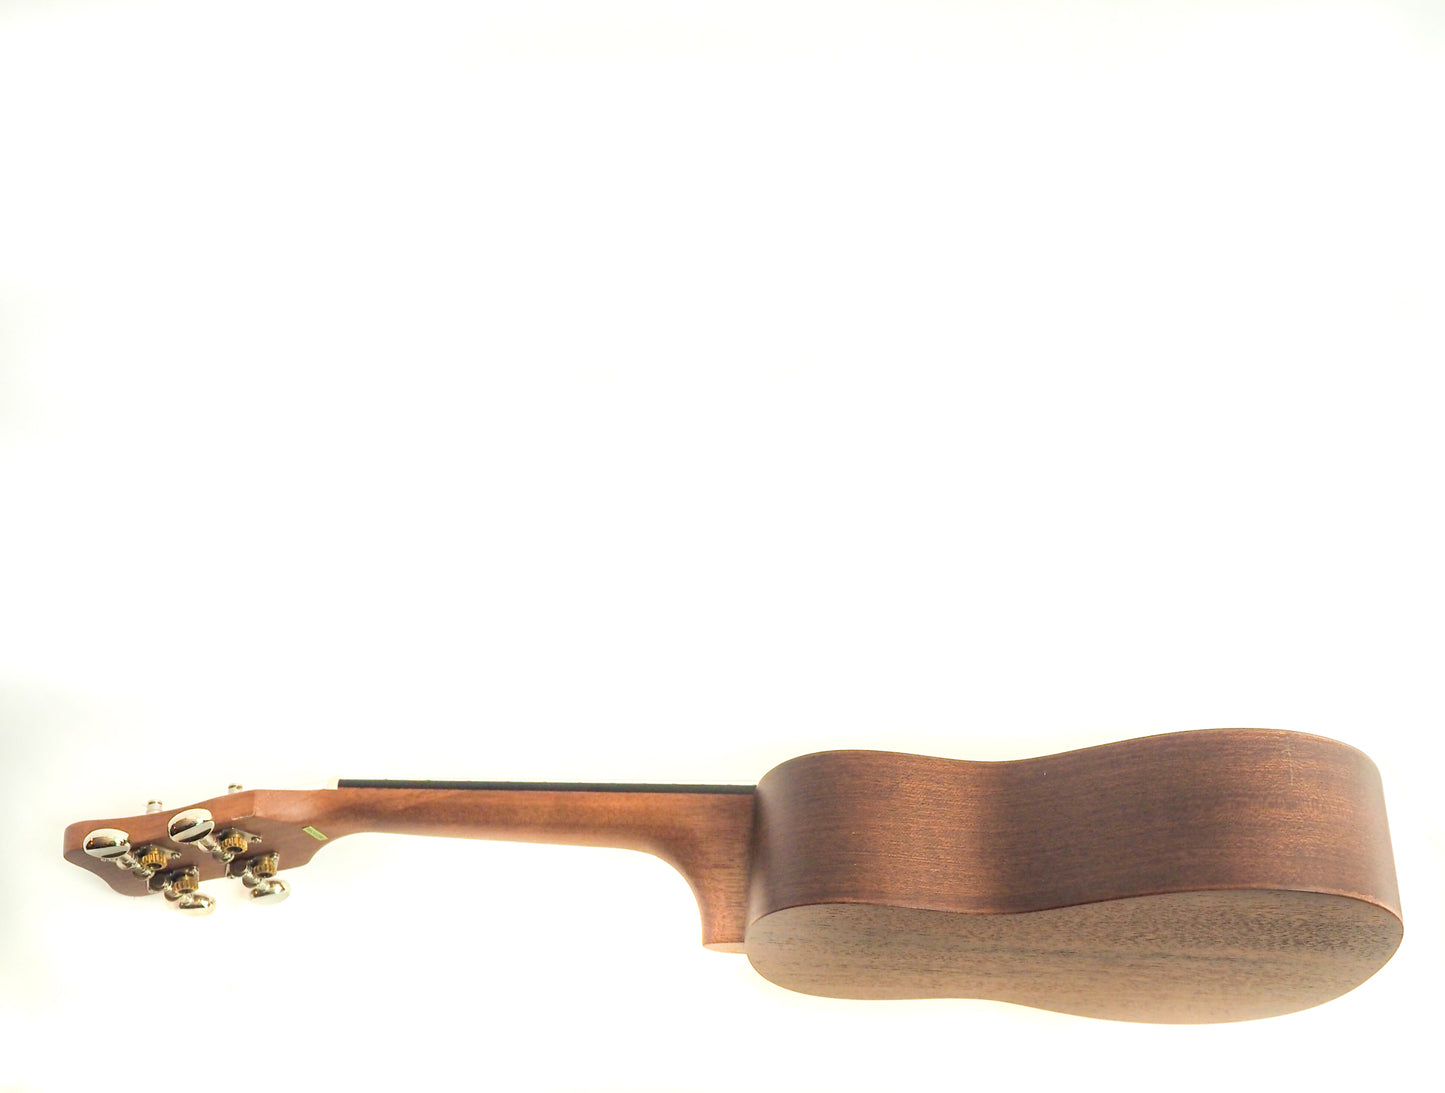 Kohala AK-SLGC Soprano ukulele with chord book, tunes up and plays in tune, nice sounding.